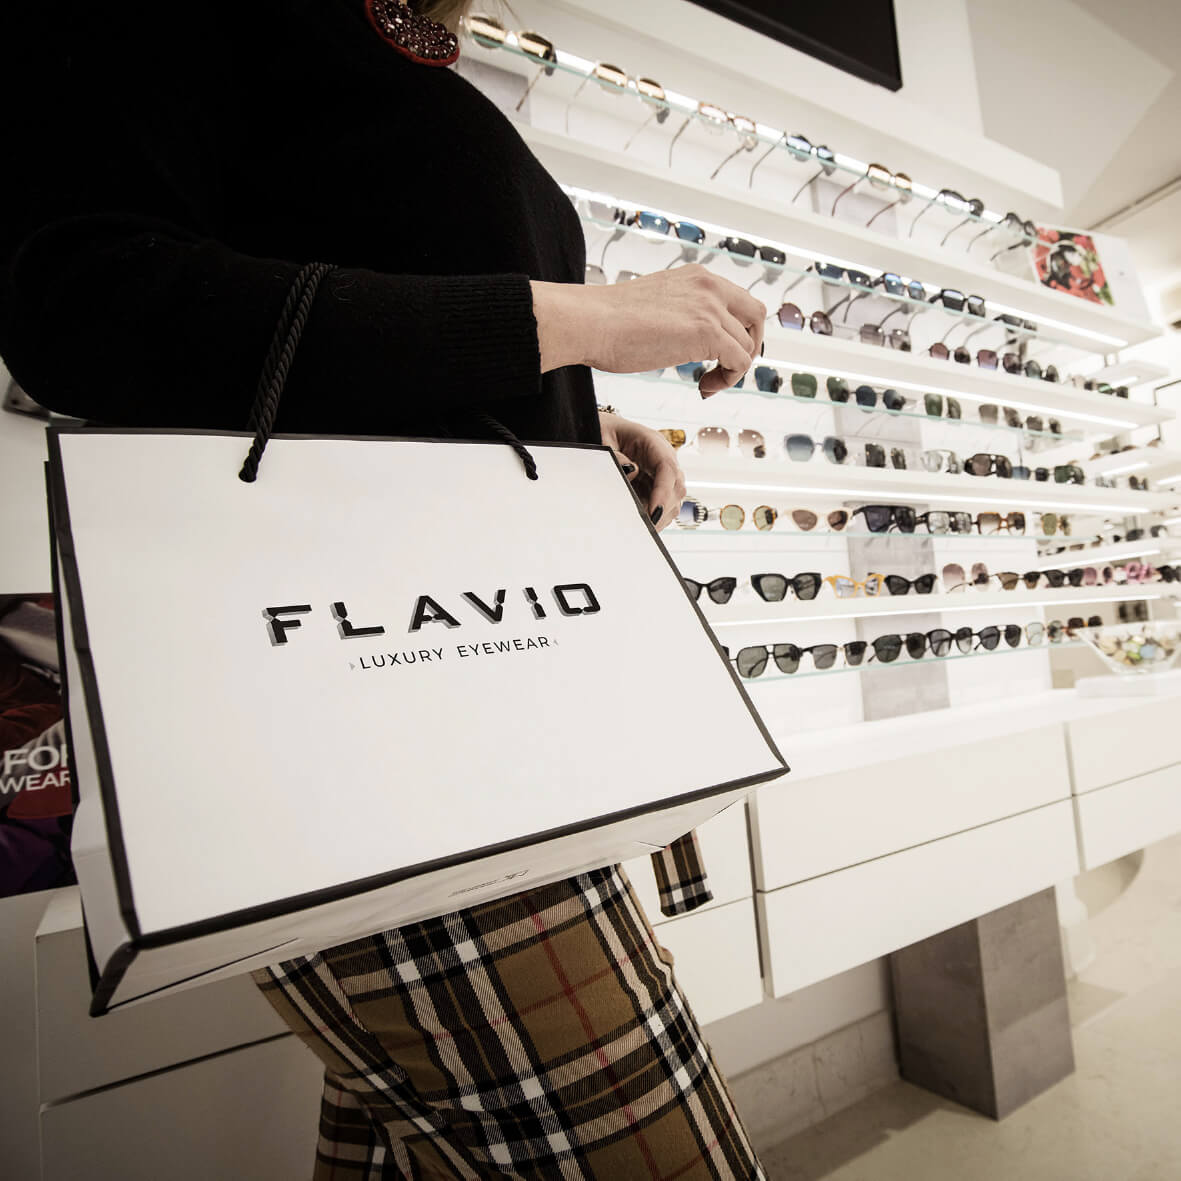 Flavio Luxury Eyewear